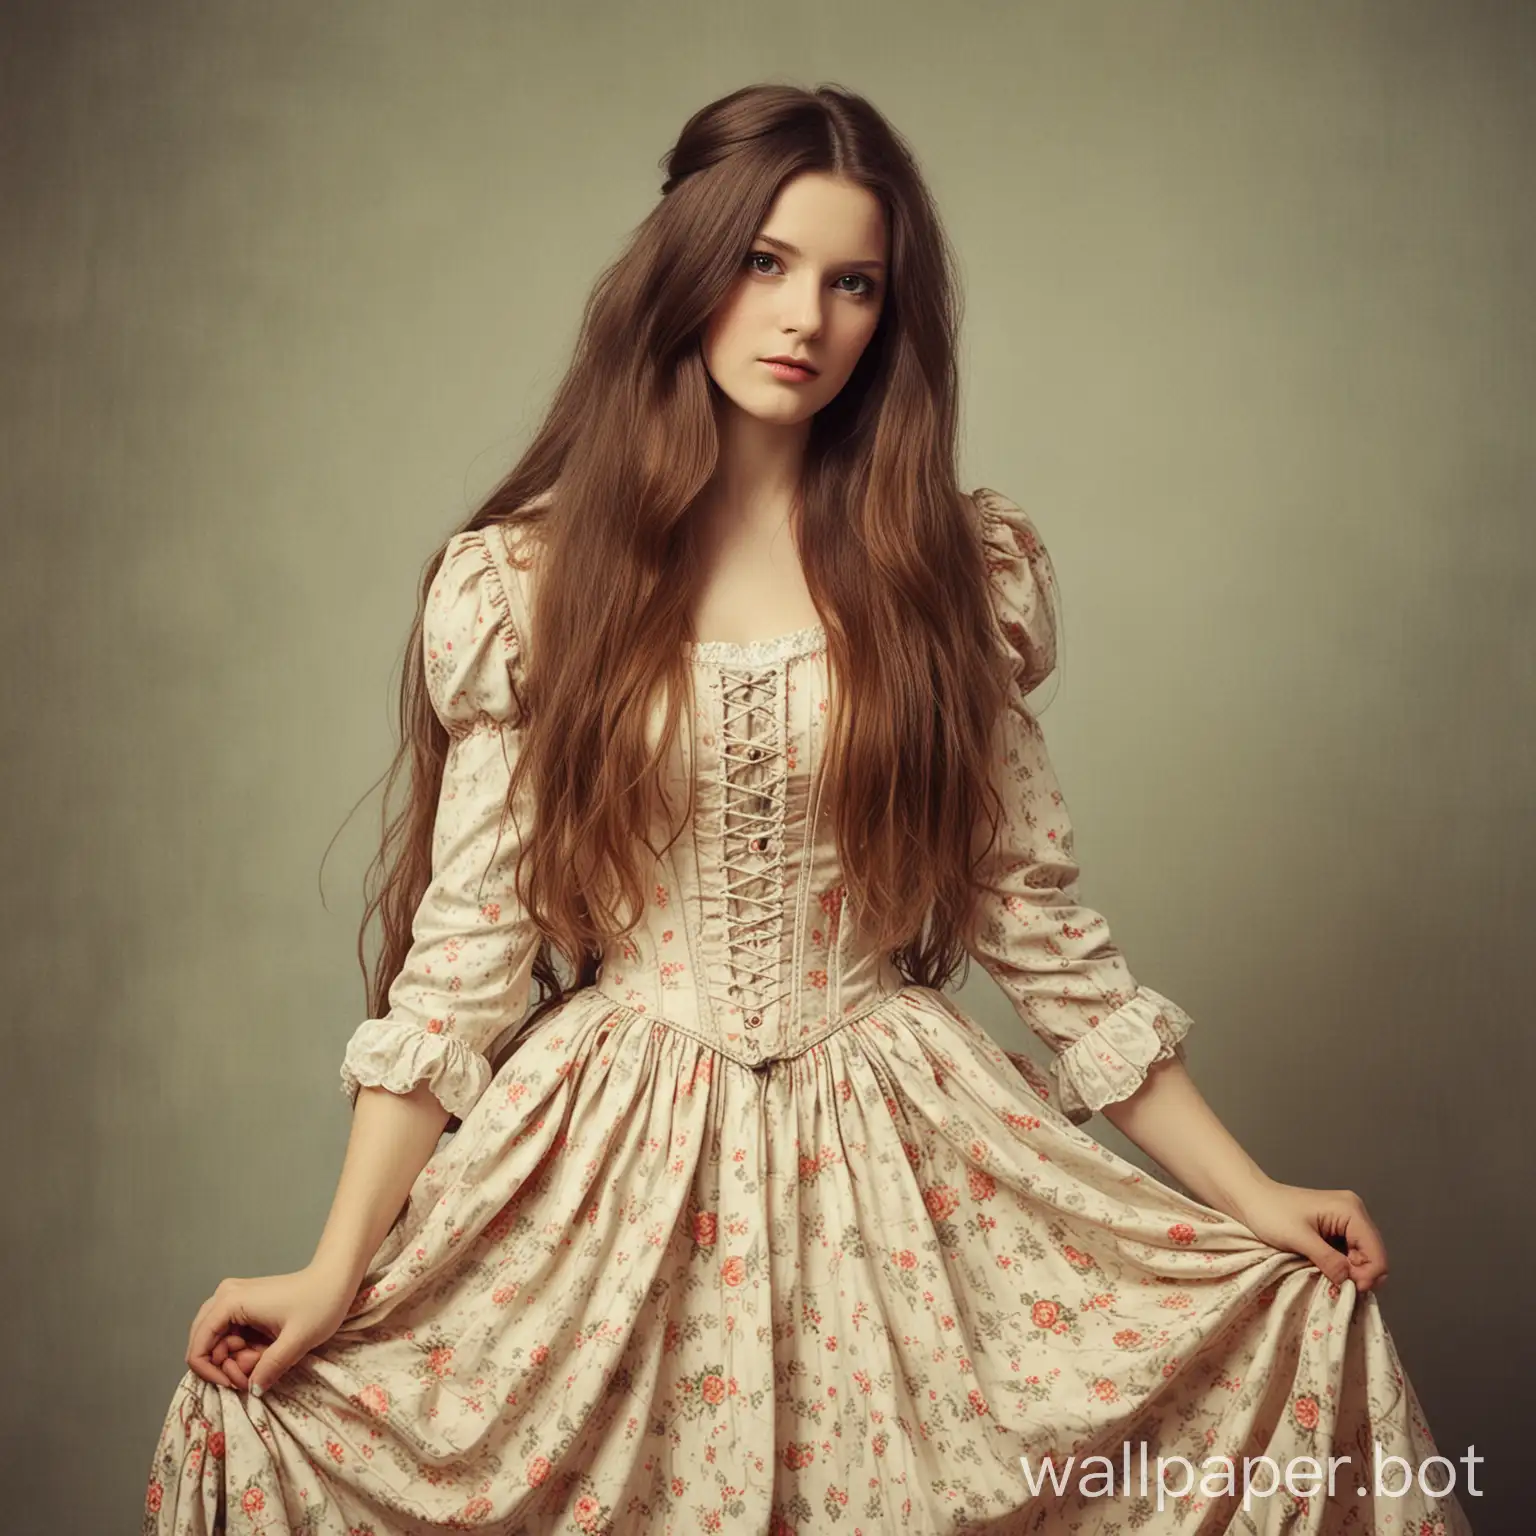 Female maiden, huge dress, long hair, vintage style,